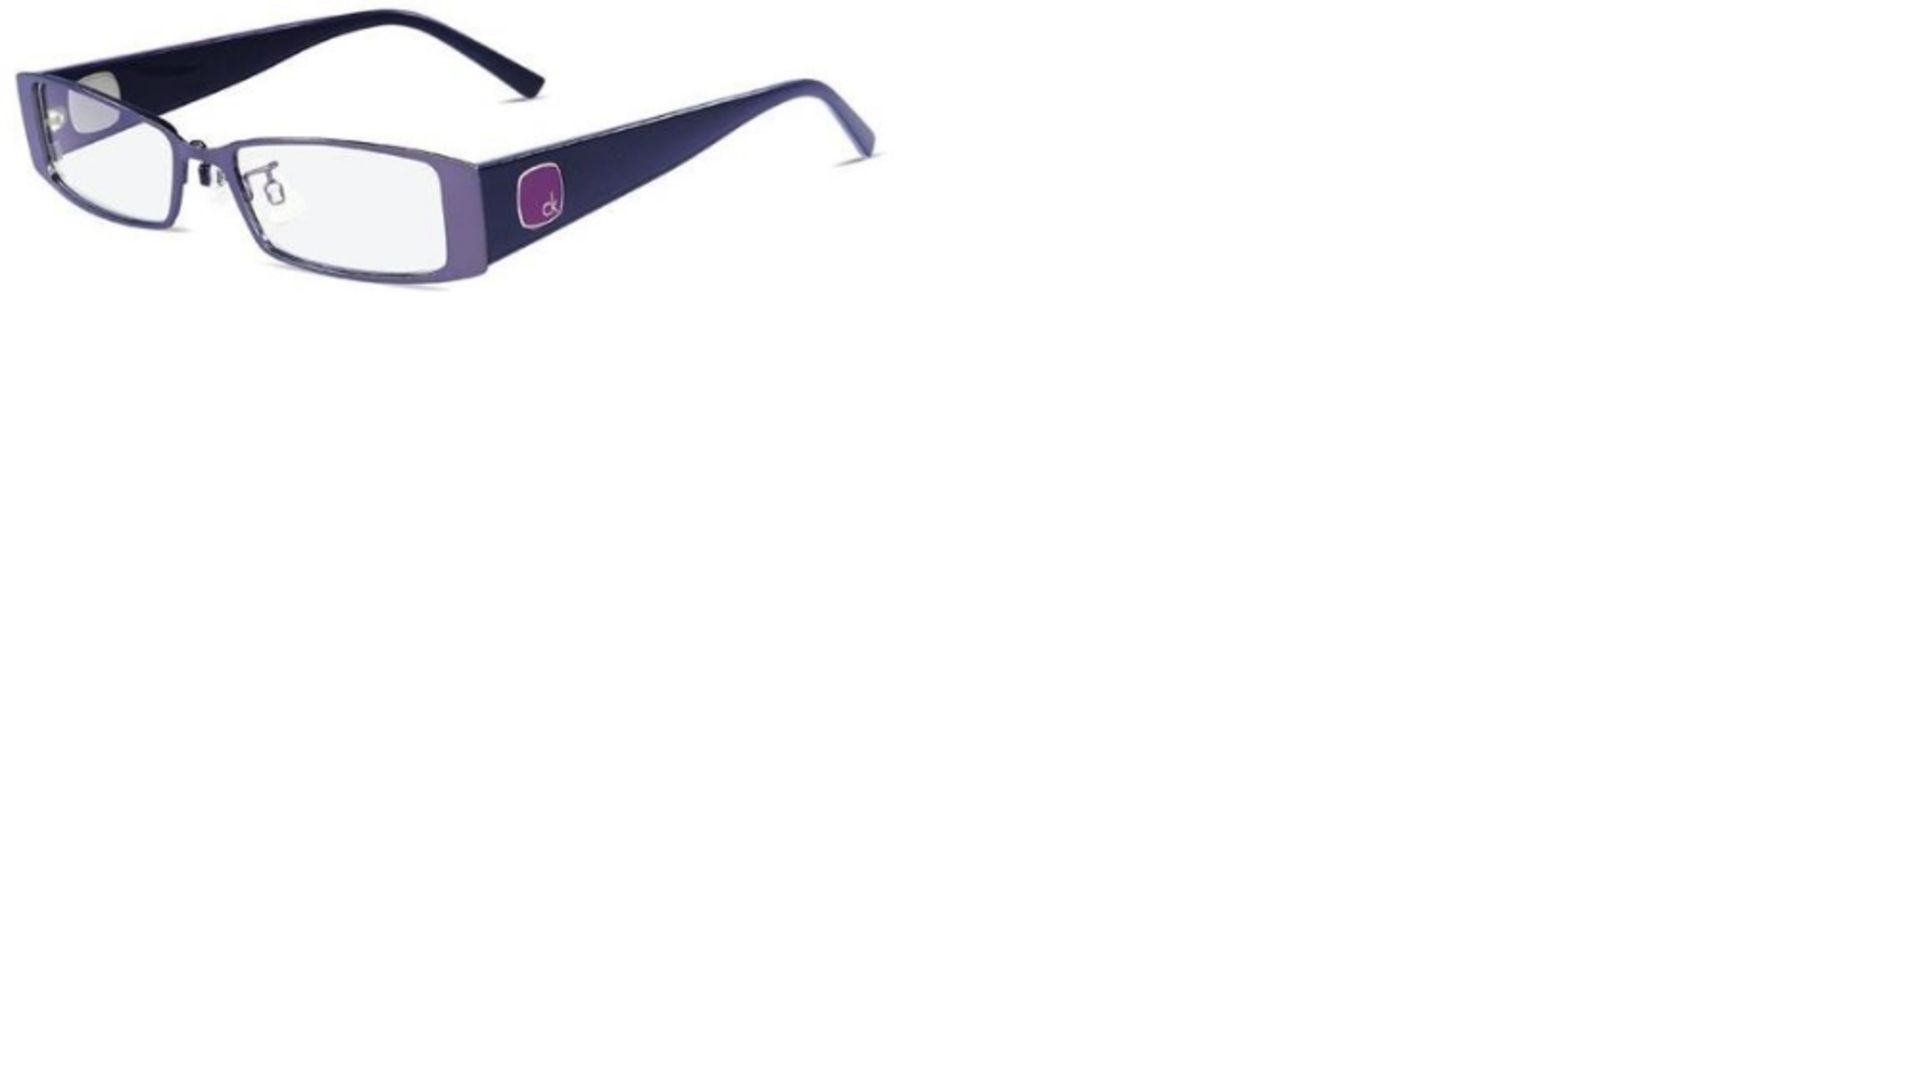 1 x Calvin Klein Glasses Frames Model: CK5279-660 Colour Purple